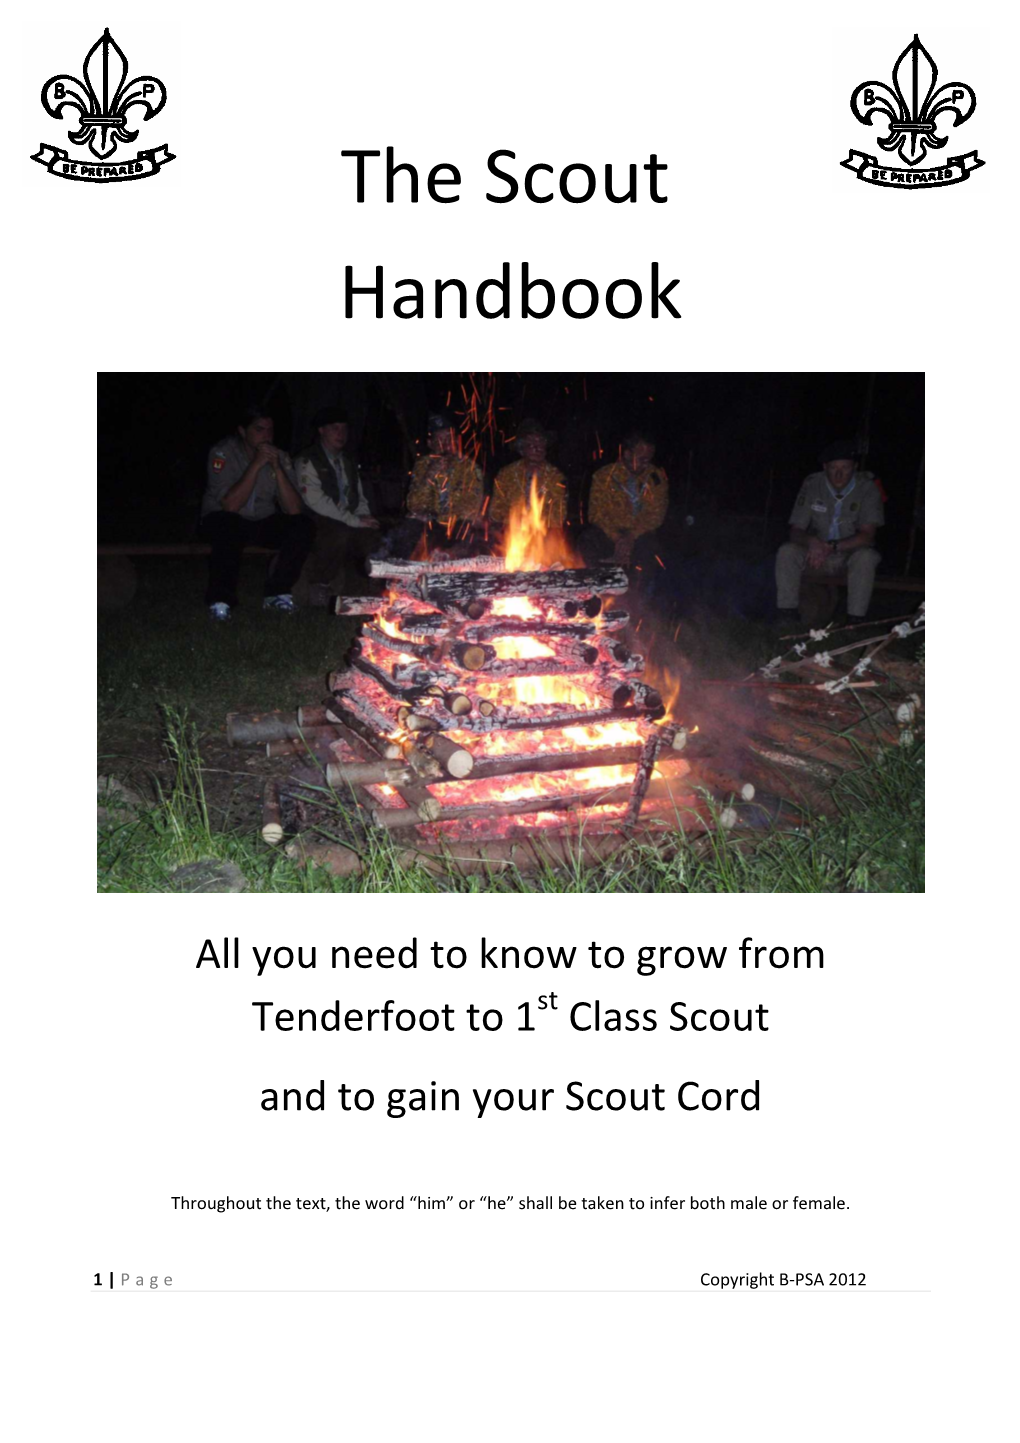 The Scout Handbook